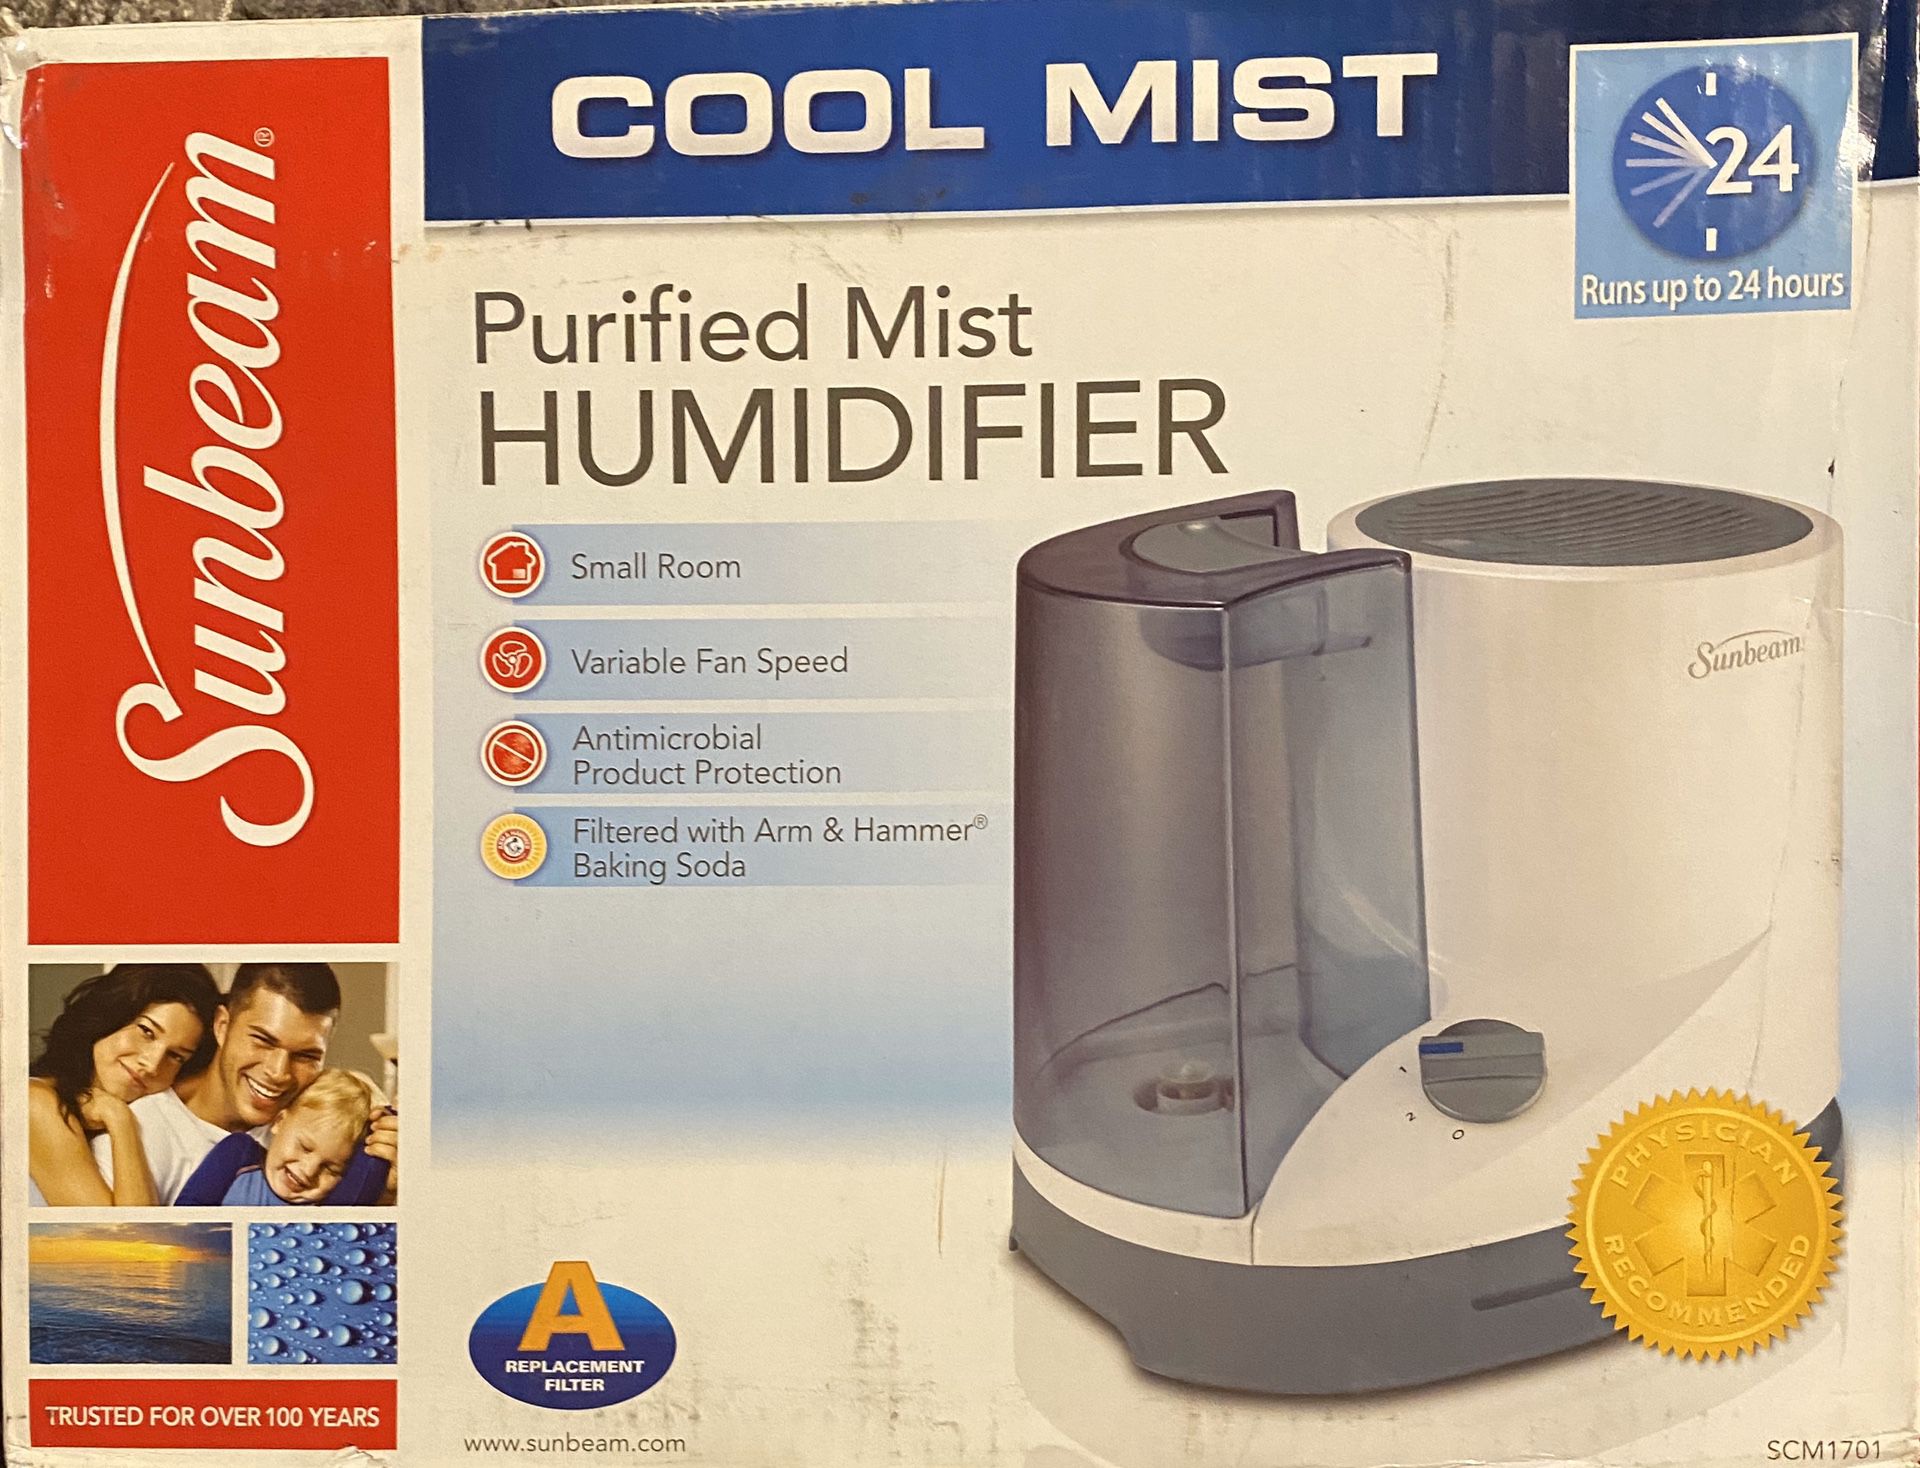 Sunbeam Cool Mist Humidifier purified mist